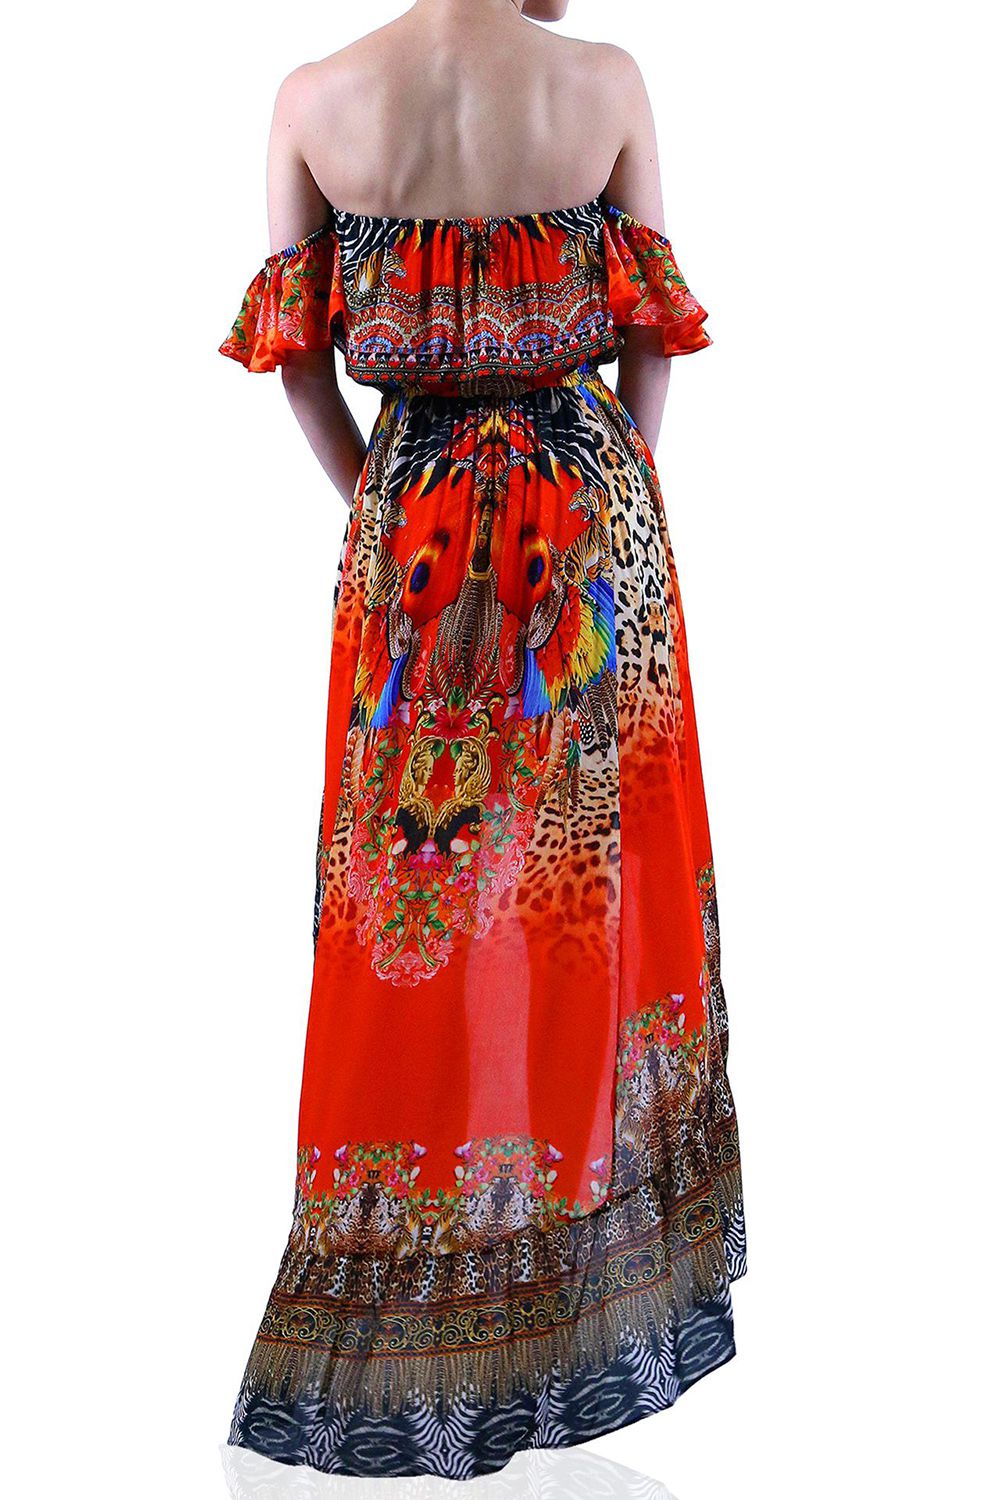  long formal orange dress, formal dresses for women, plus size maxi dresses, Shahida Parides, high low ruffle dress,